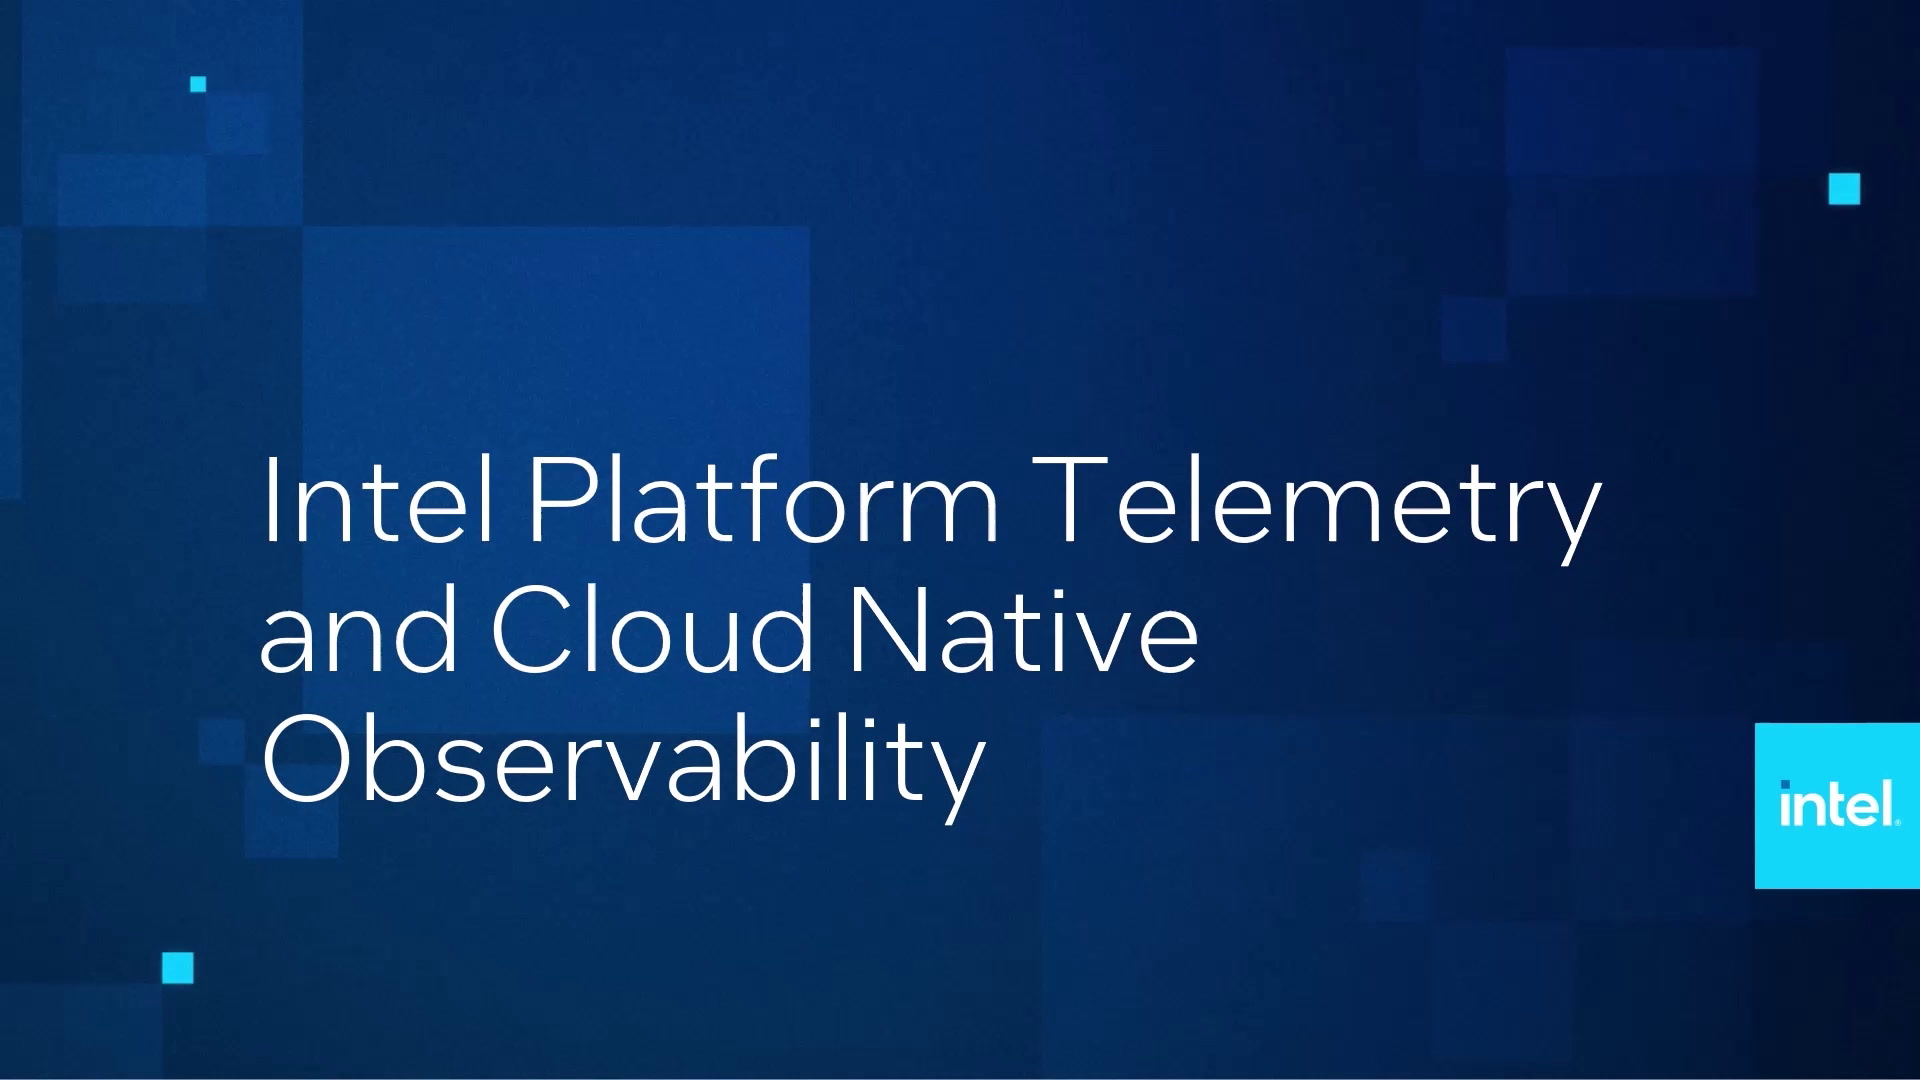  Intel Platform Telemetry and Cloud Native Observability